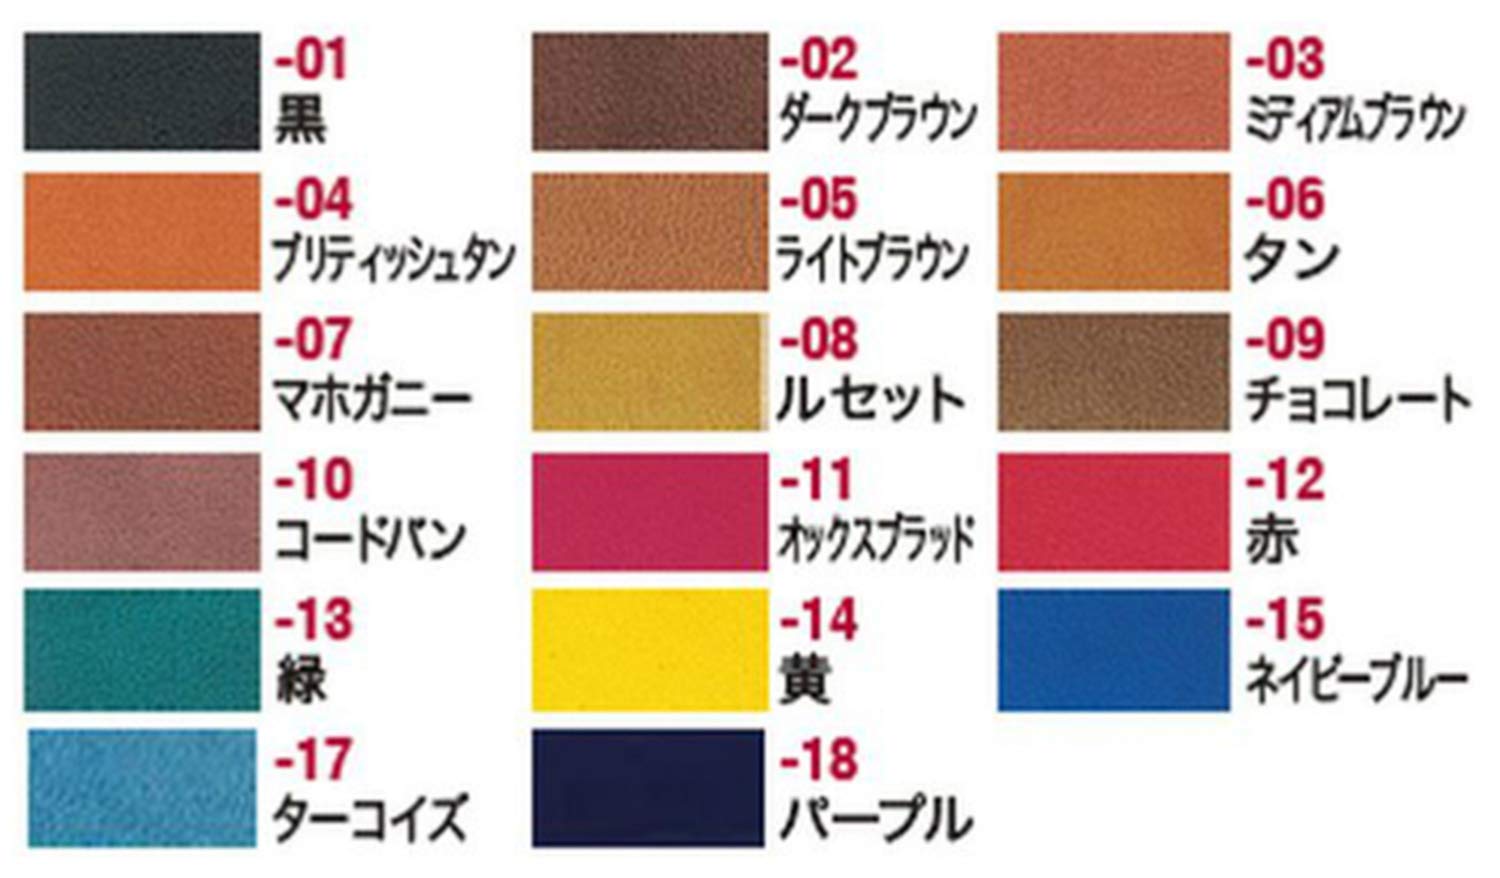 Fiebing's FILDYE68P032Z Leather Dye - Red, 32 oz